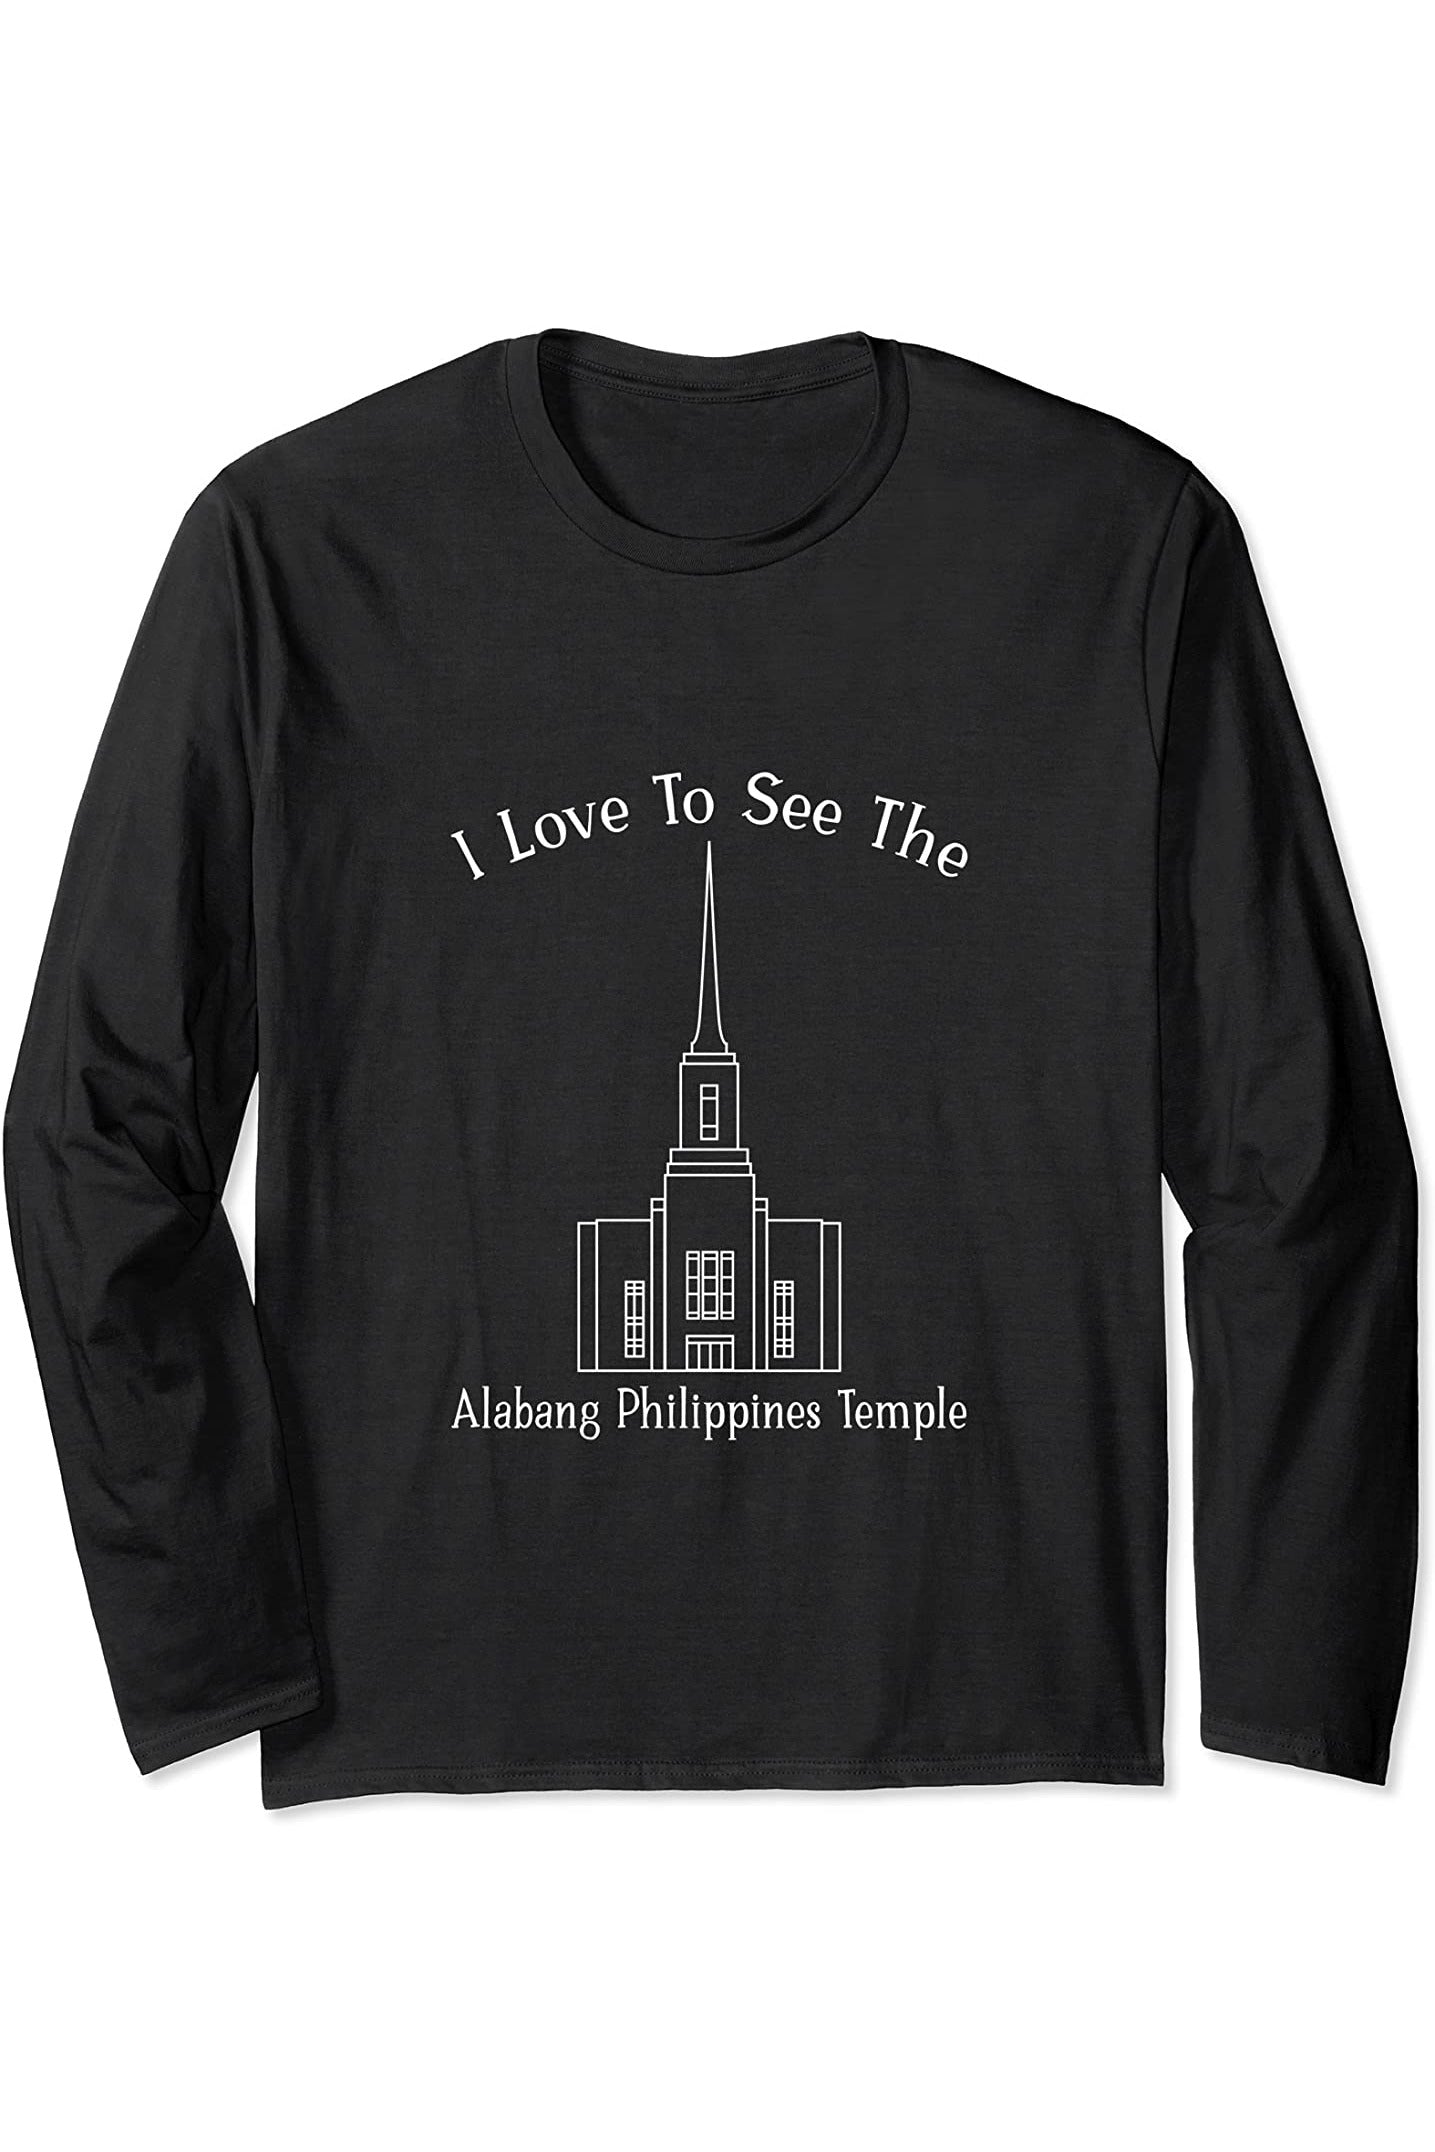 Alabang Philippines Temple Long Sleeve T-Shirt - Happy Style (English) US